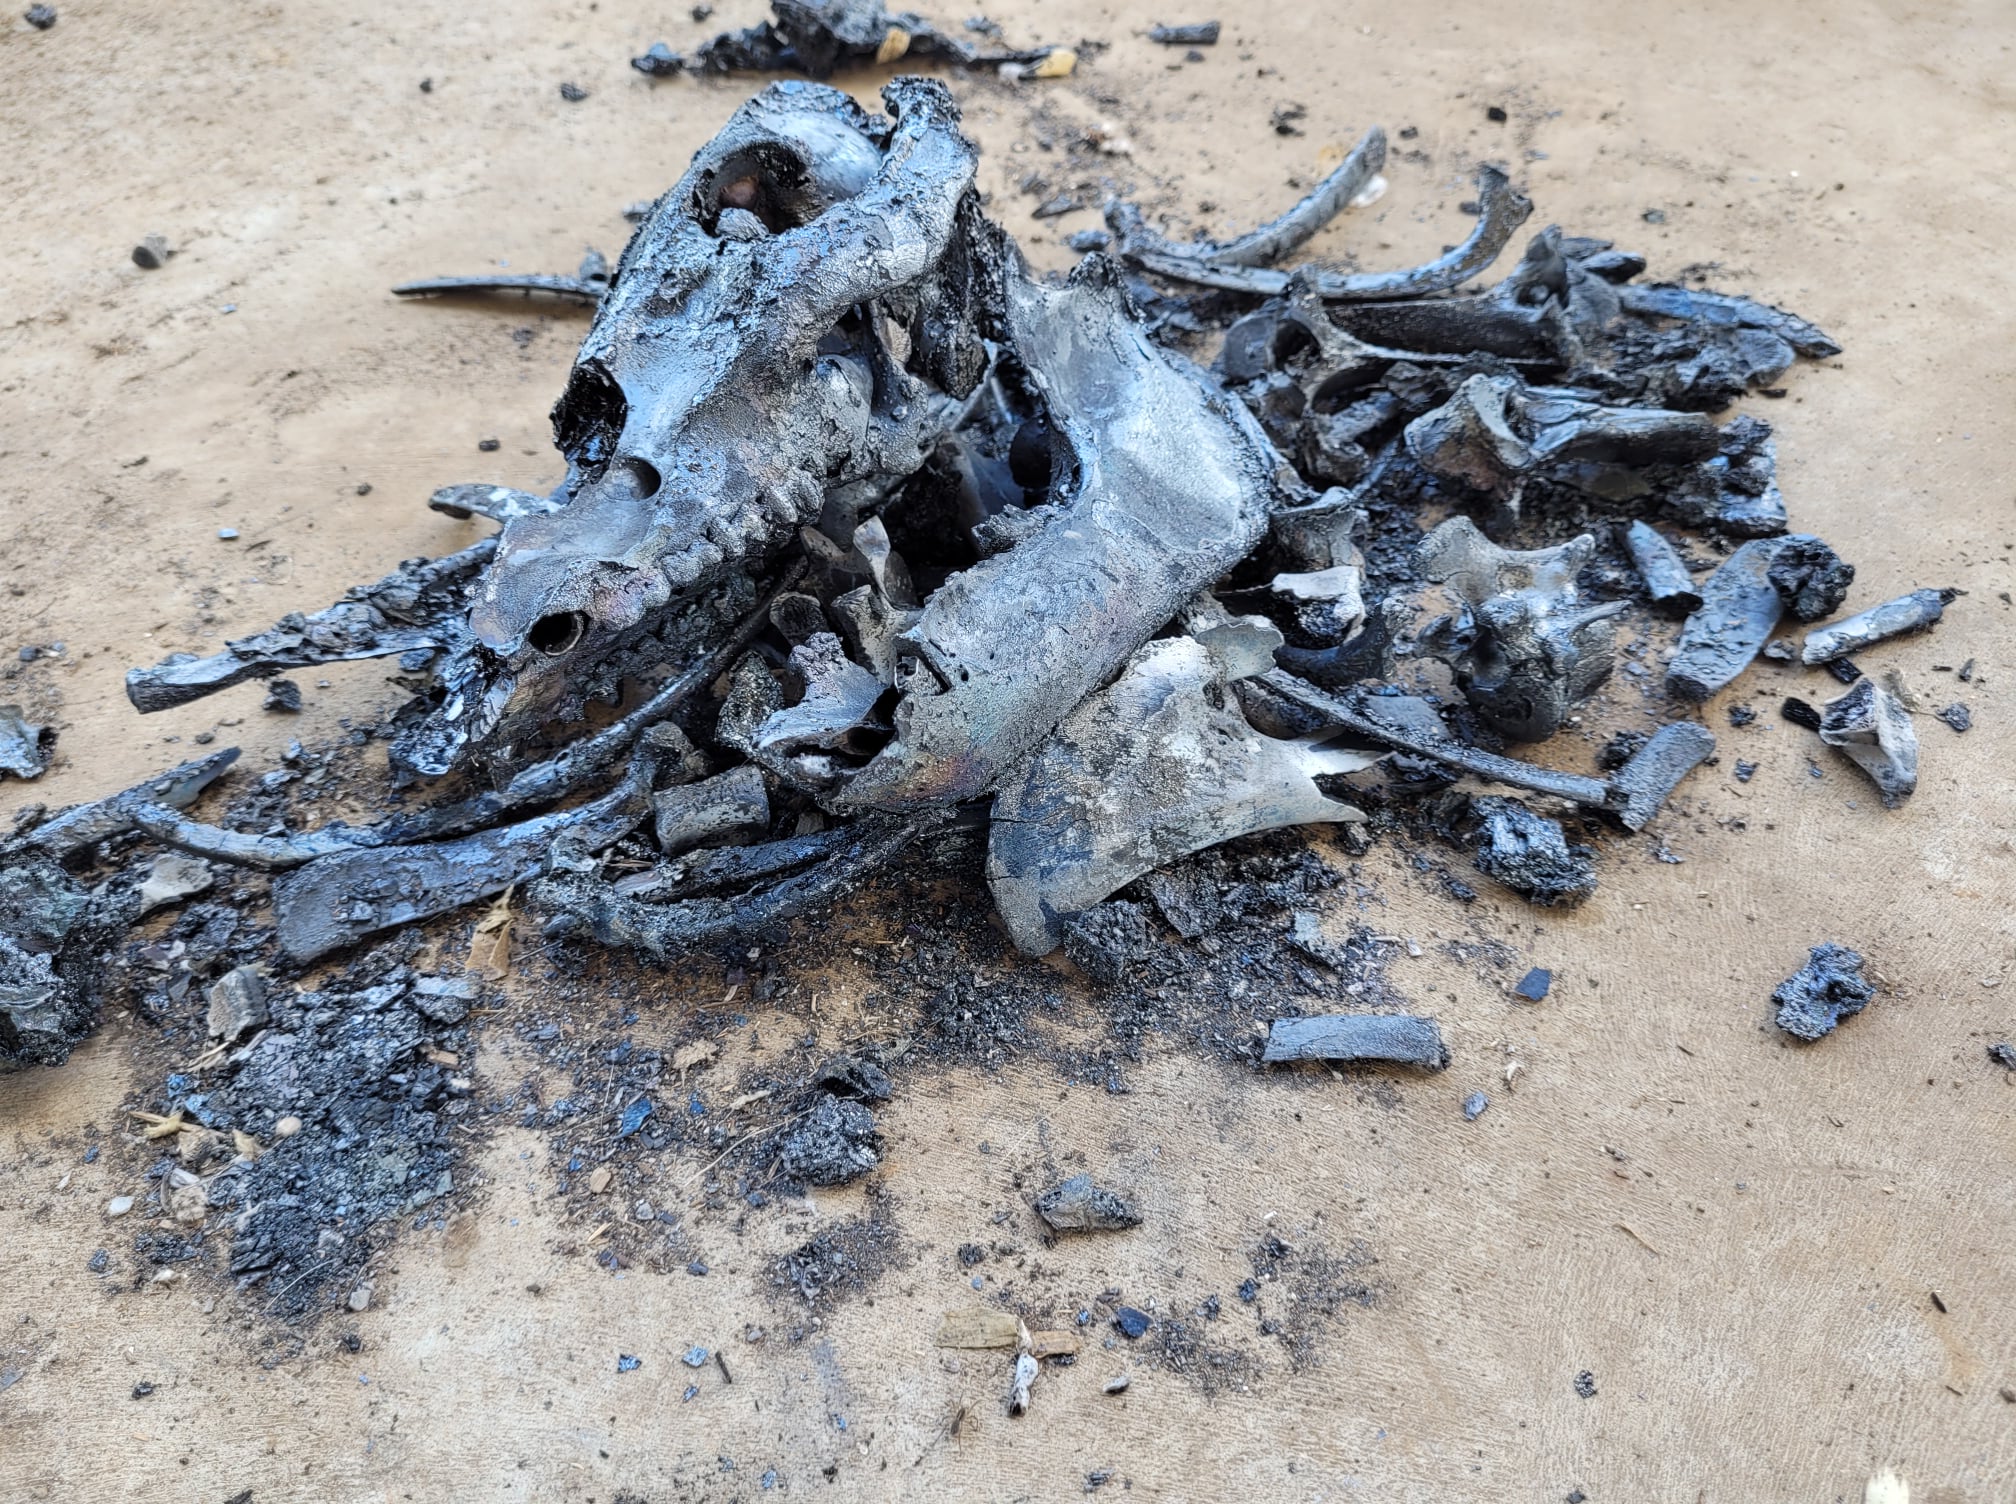 The charred bones of an animal that had gone through the biochar process.